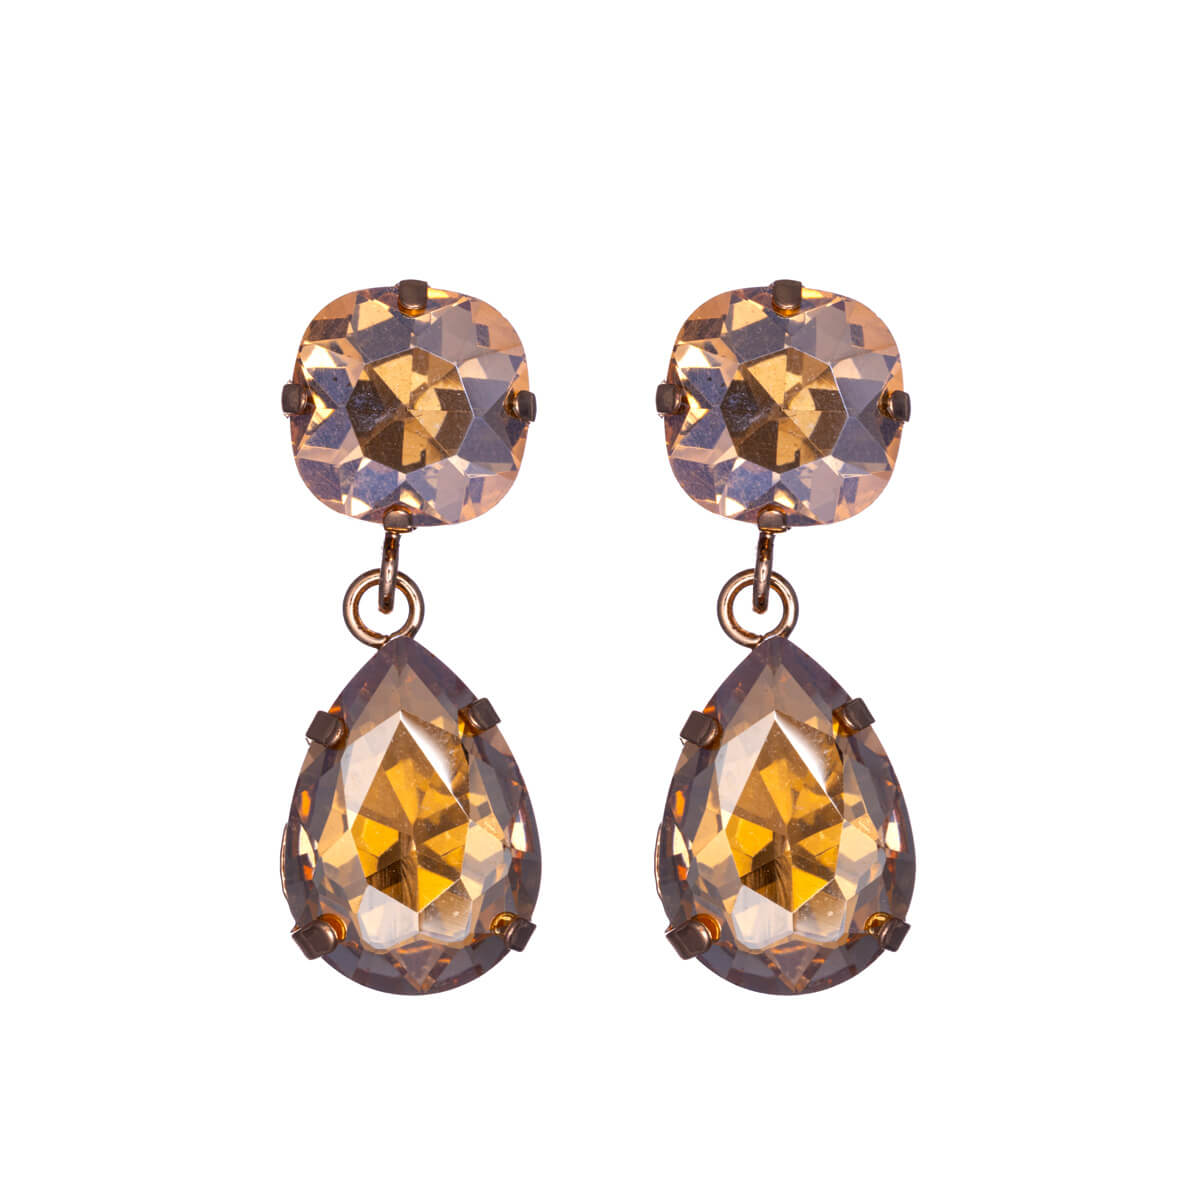 Rhinestone festive earrings rhinestone drops